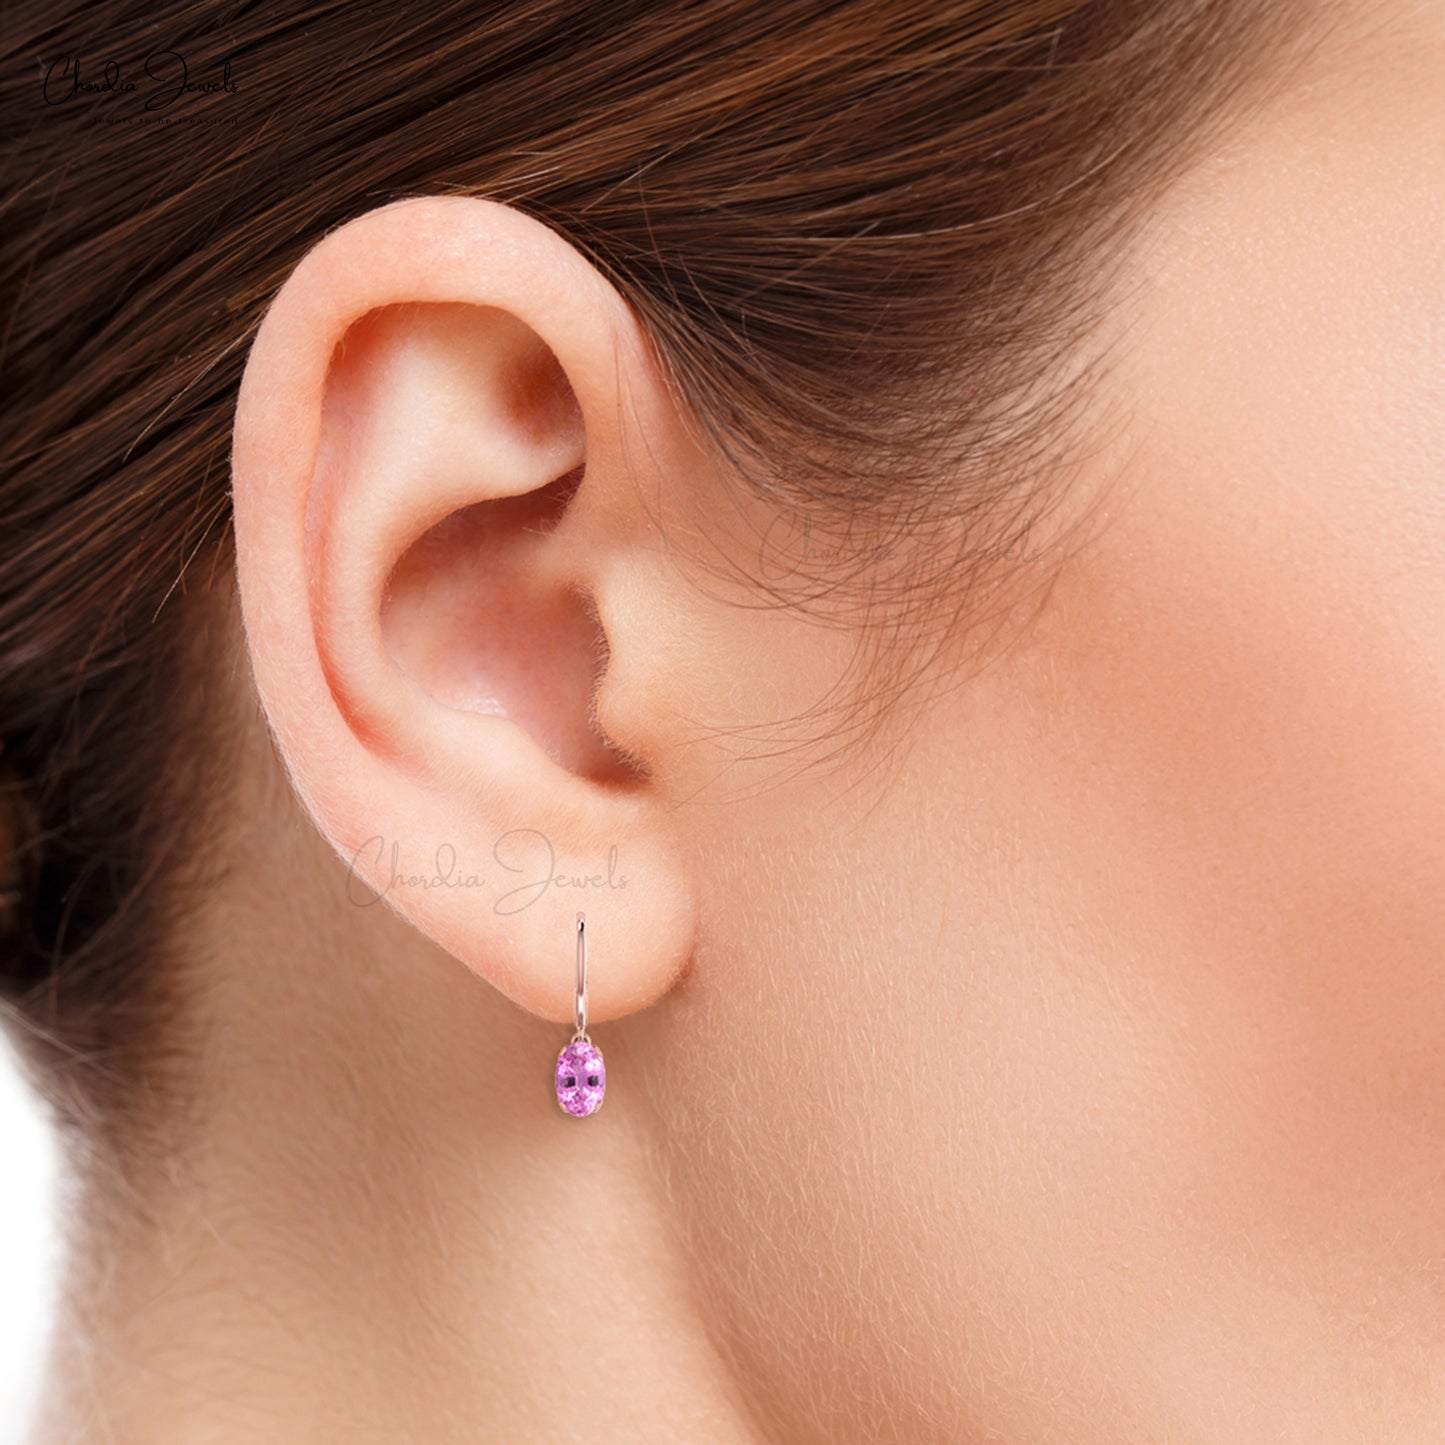 Solid 14k Gold Pink Sapphire Dangle Earrings 1.16ct September Birthstone Light Weight Earring